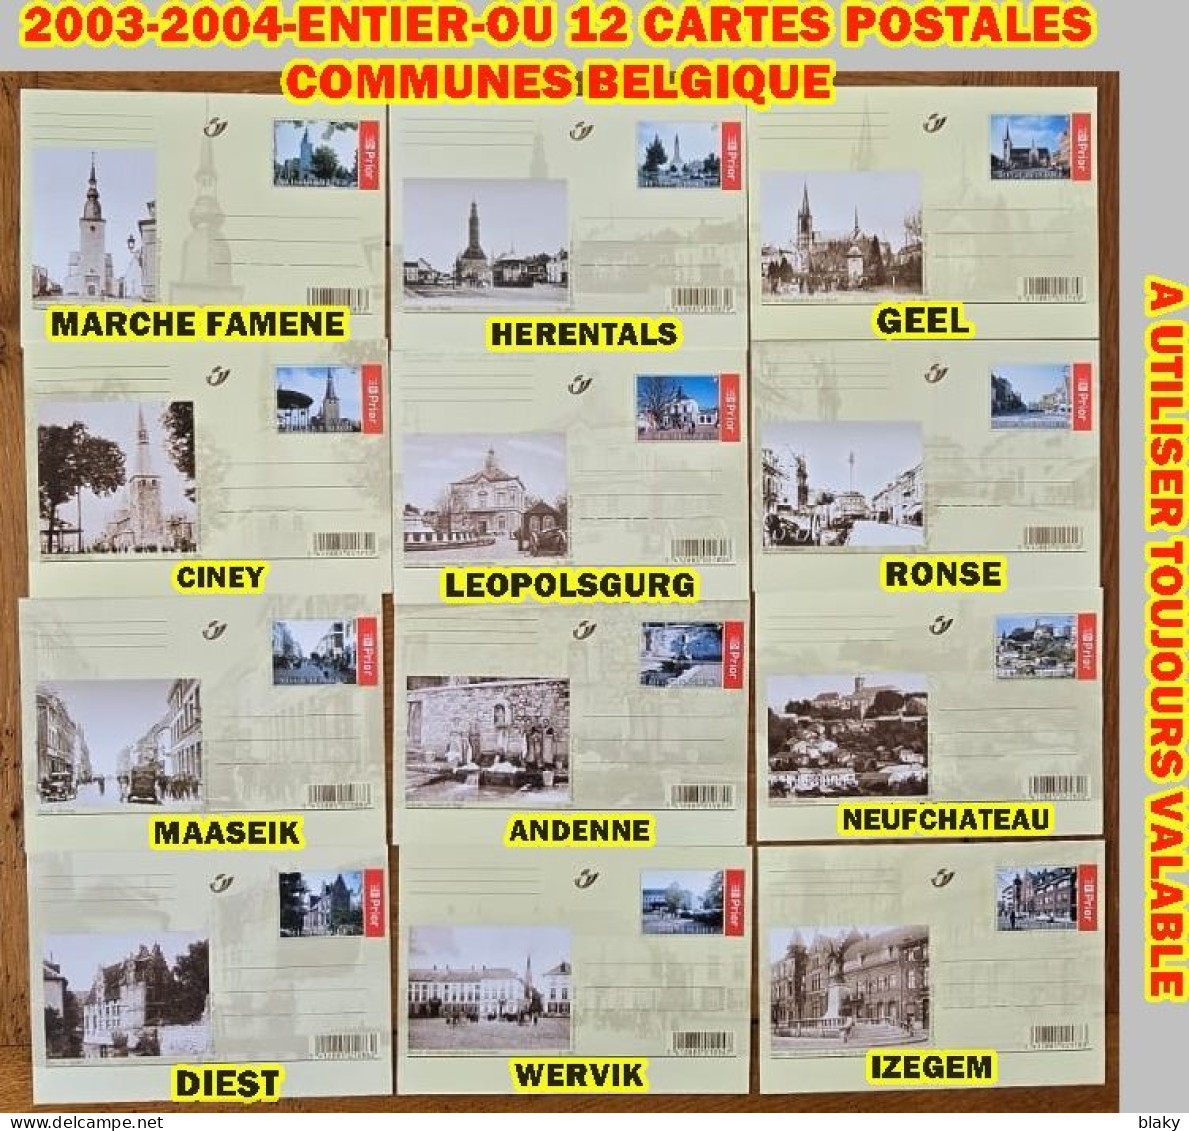 2003-2004-ENTIER-OU 12 CARTES POSTALES COMMUNES BELGES * IMPORTANT PRE TIMBREES - Illustrated Postcards (1971-2014) [BK]